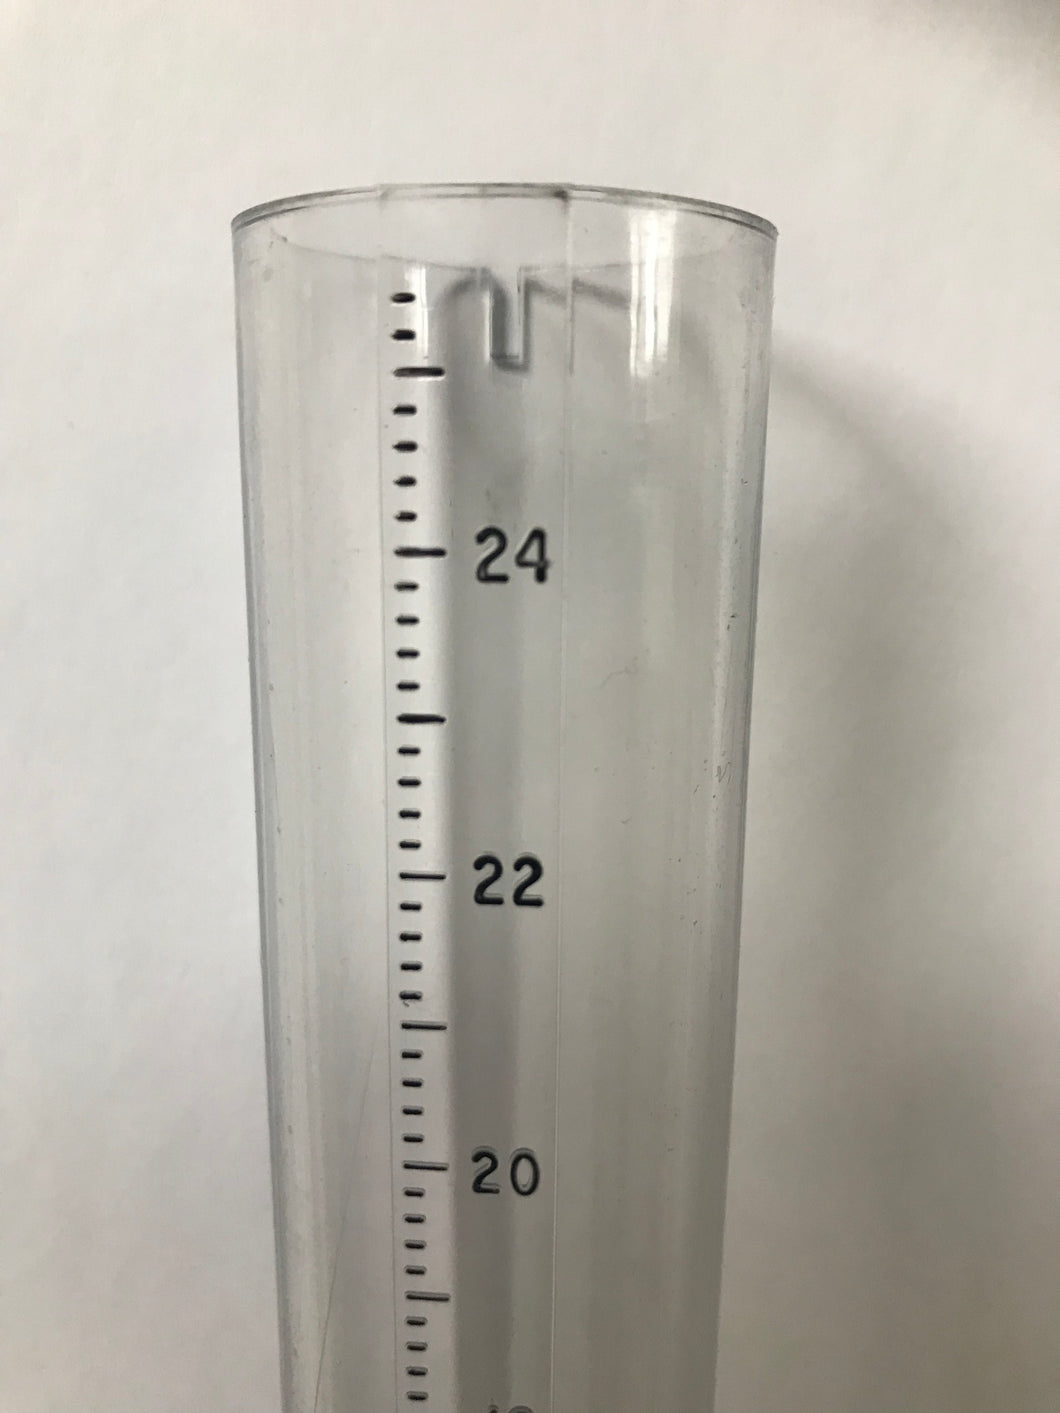 Change CoCoRaHS measuring tube to METRIC units